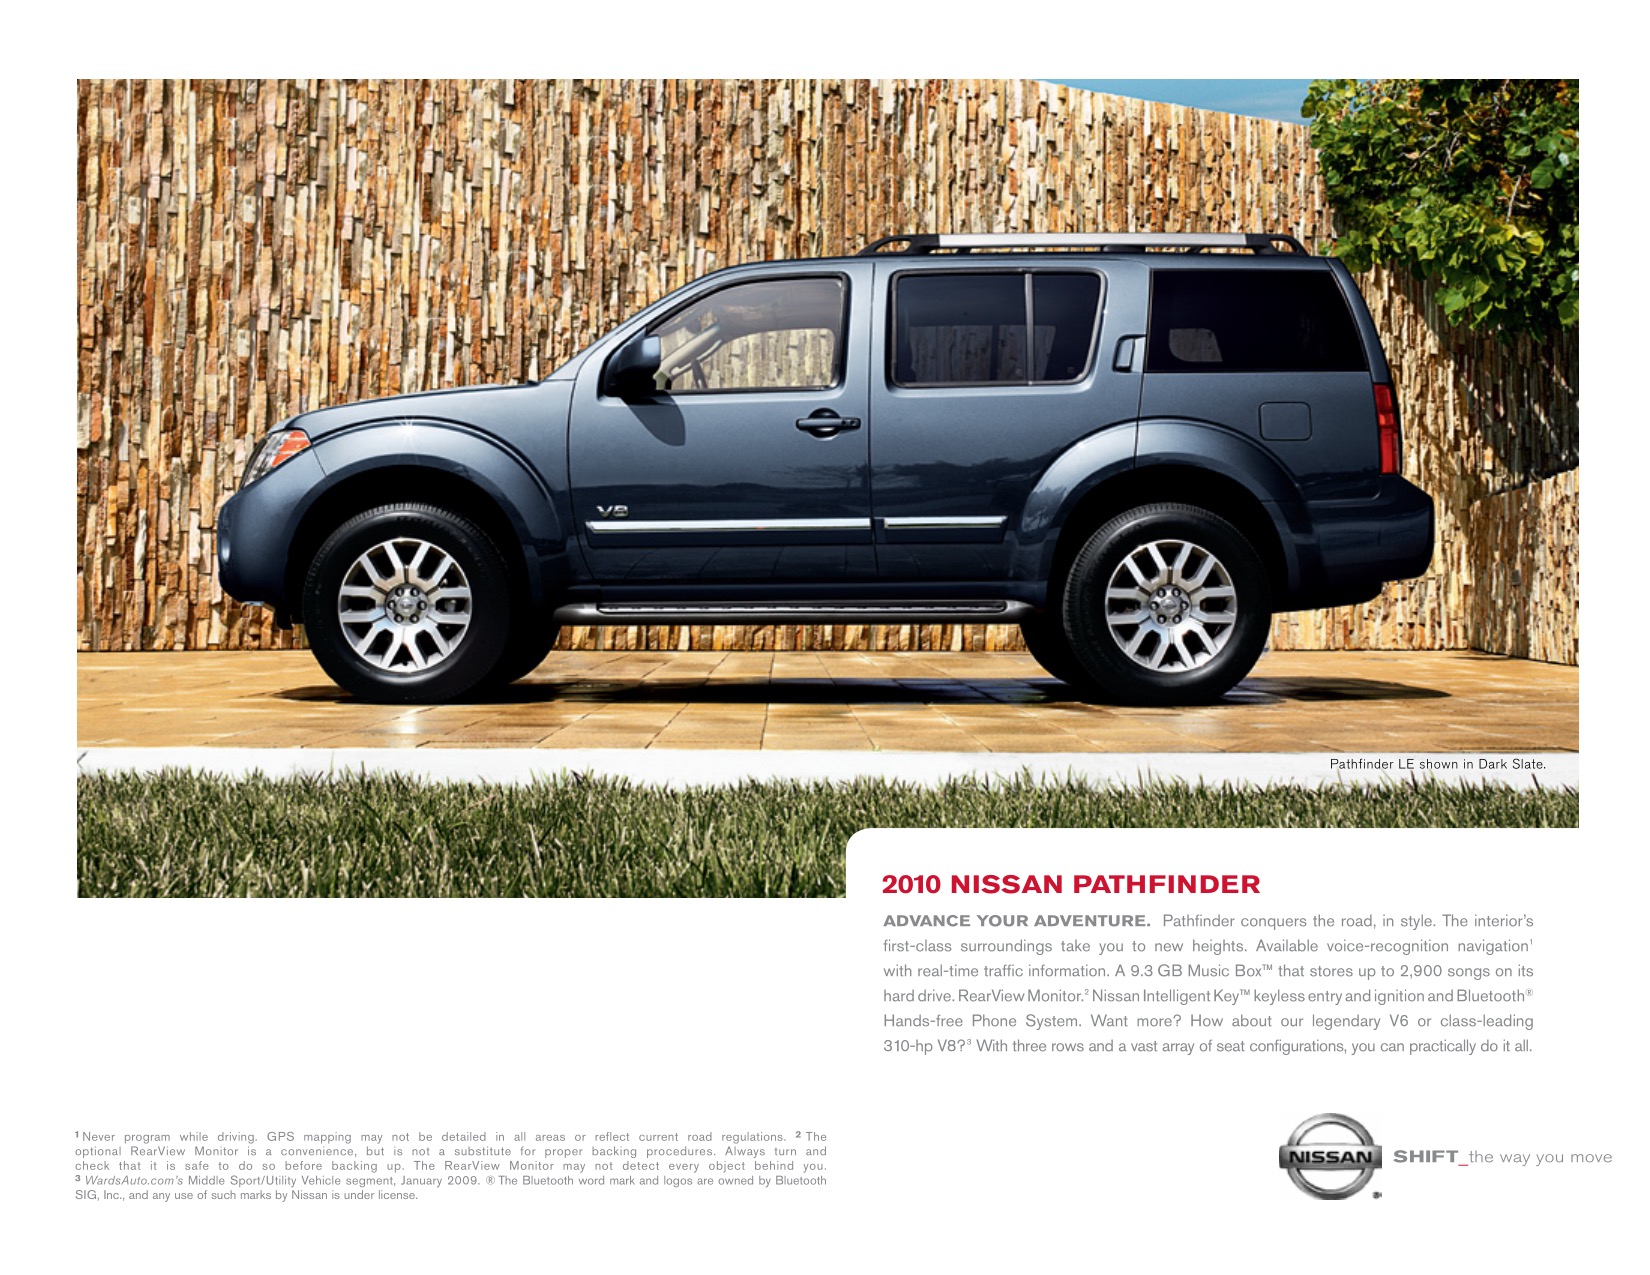 2010 Nissan Pathfinder Brochure